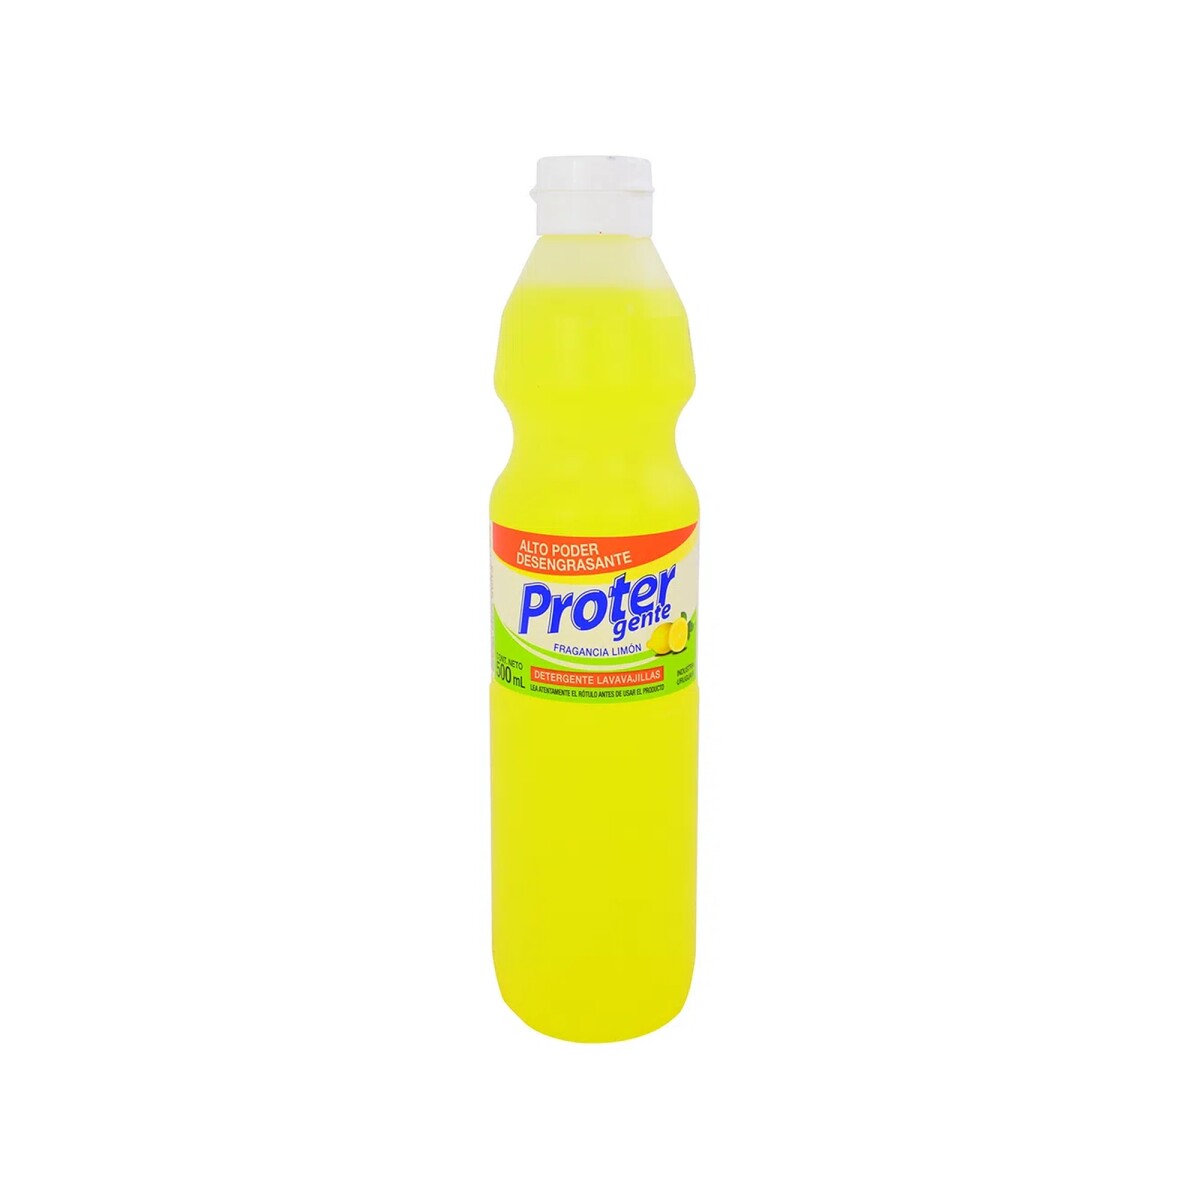 Detergente PROTER limon botella x 0.500 ml 